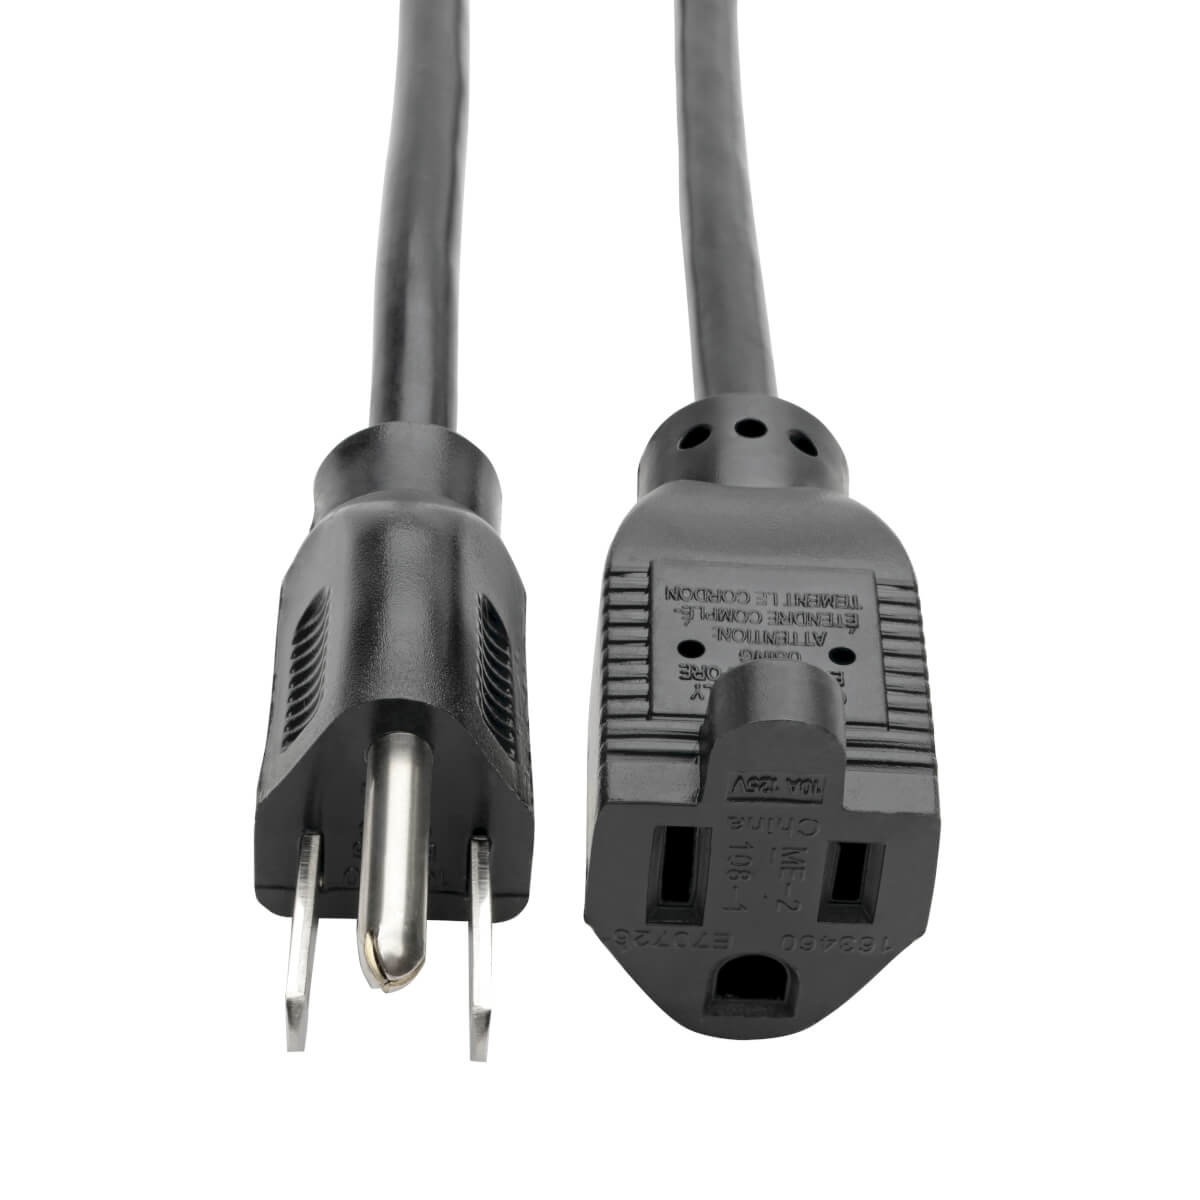 Tripp Lite Regleta de alimentación de 7 salidas NEMA 5-15R AC 25' Cable  5-15P Carcasa negra (PS725B)